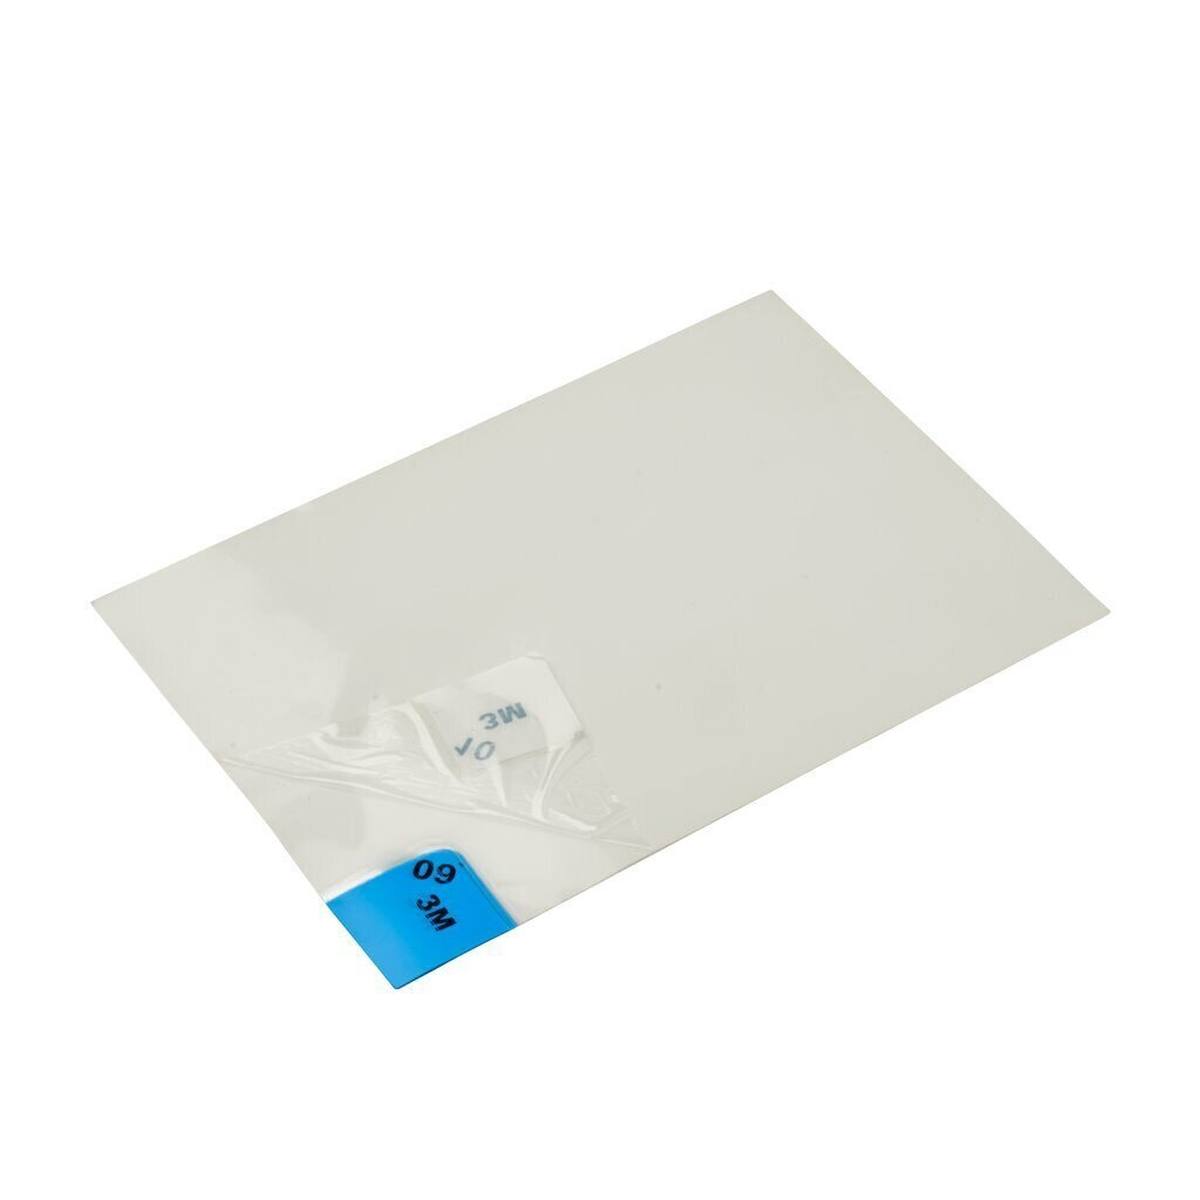 3M 4300 Nomad fijnstof kleefmat, wit, 0,9m x 0,45m, 40st transparante polyethyleen lagen